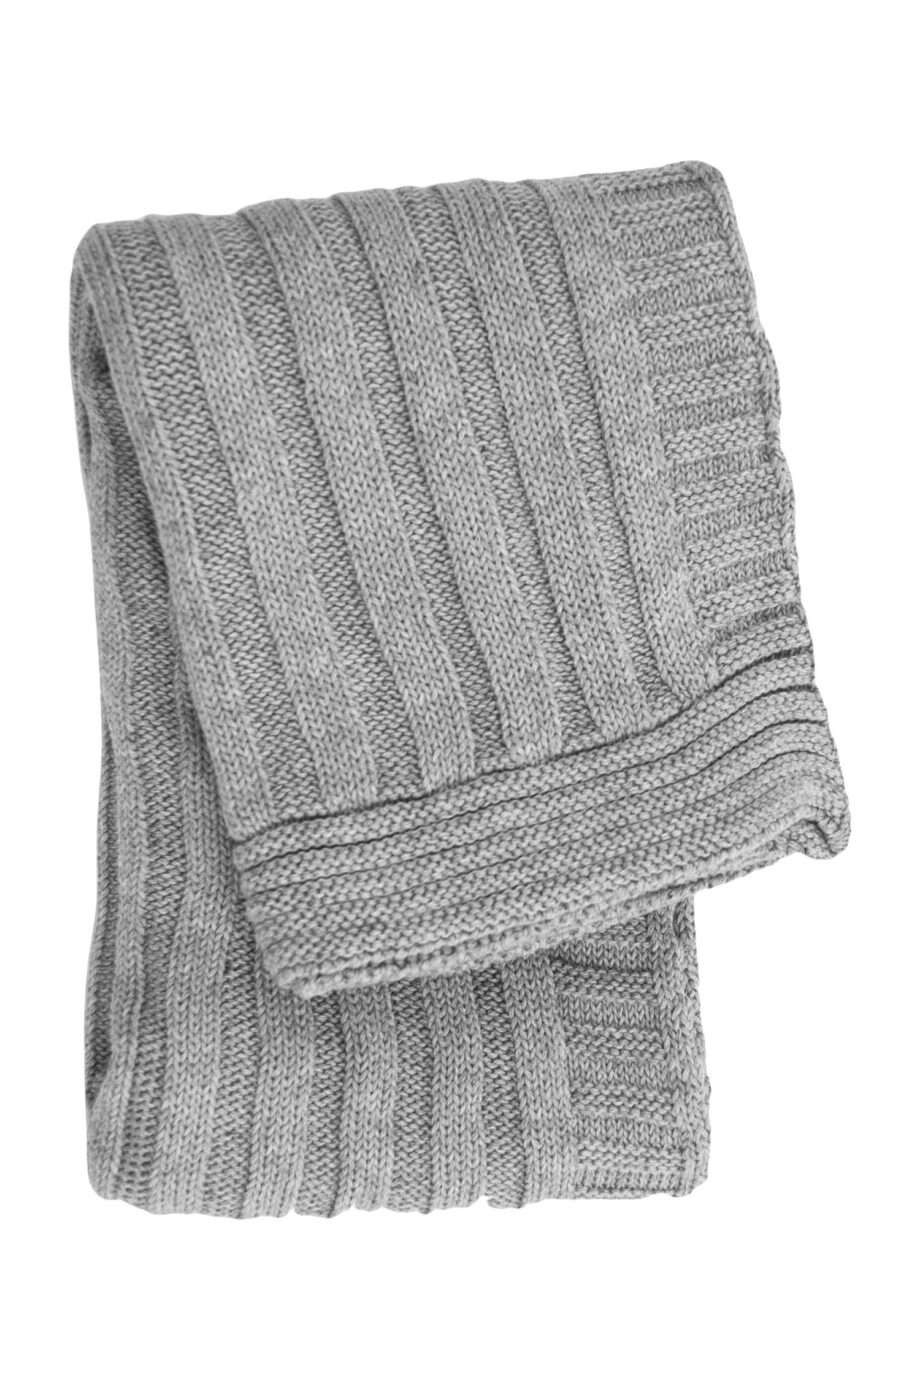 ribs light grey knitted cotton little blanket medium